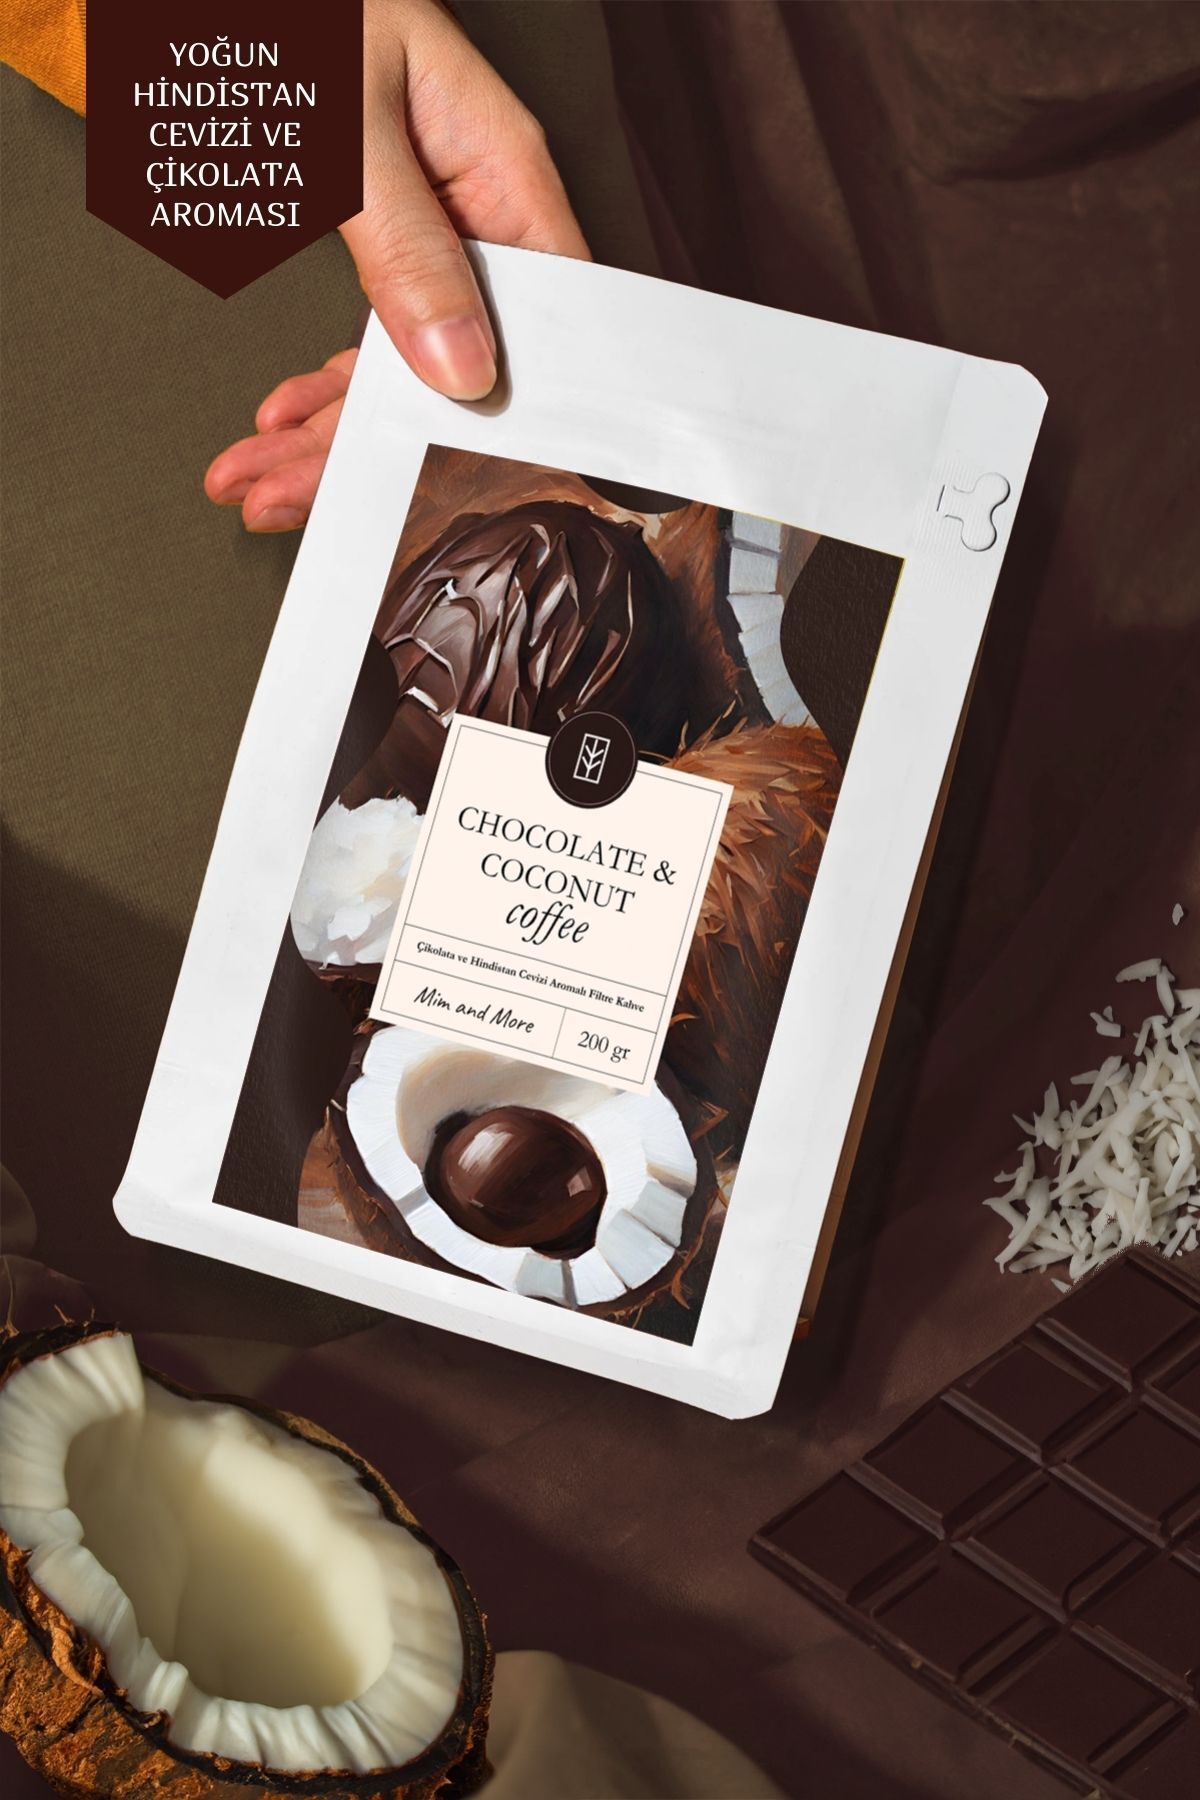 Mim and More Chocolate & Coconut Coffee Çikolata ve Hindistan Cevizi Parçacık Aromalı Kahve Filtre Kahve 200 Gr